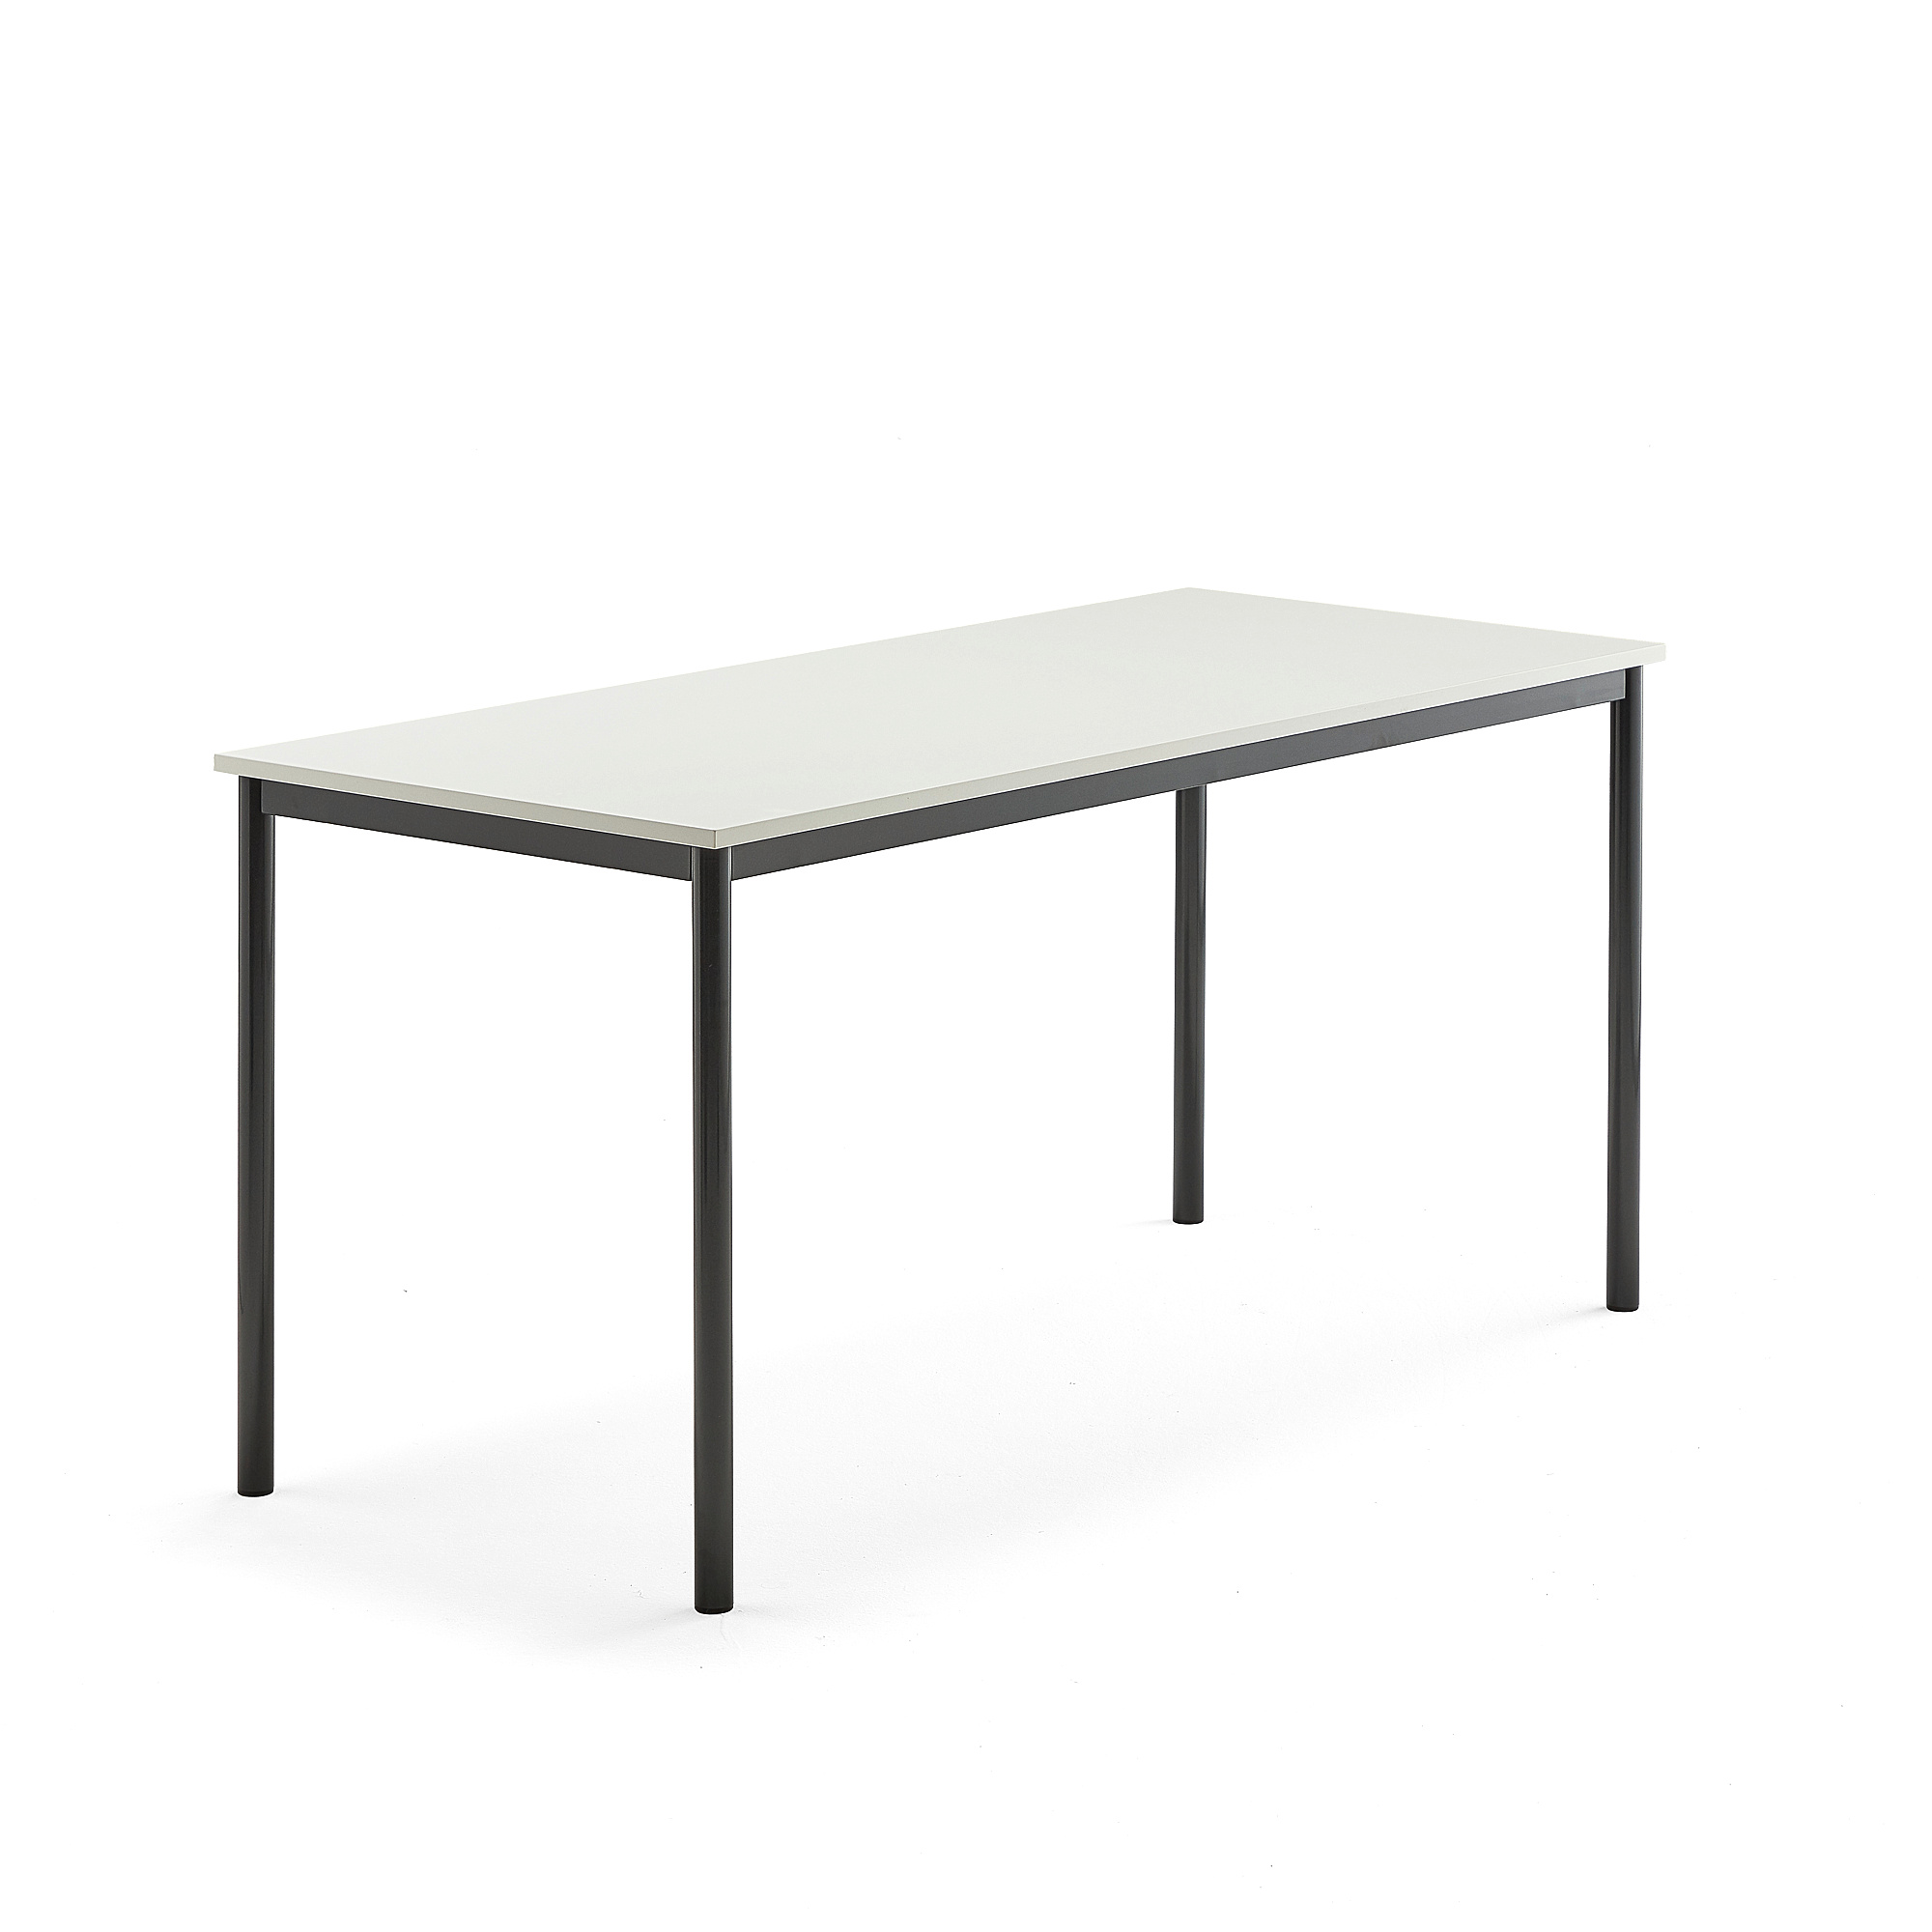 Stůl BORÅS, 1600x700x760 mm, antracitově šedé nohy, HPL deska, bílá